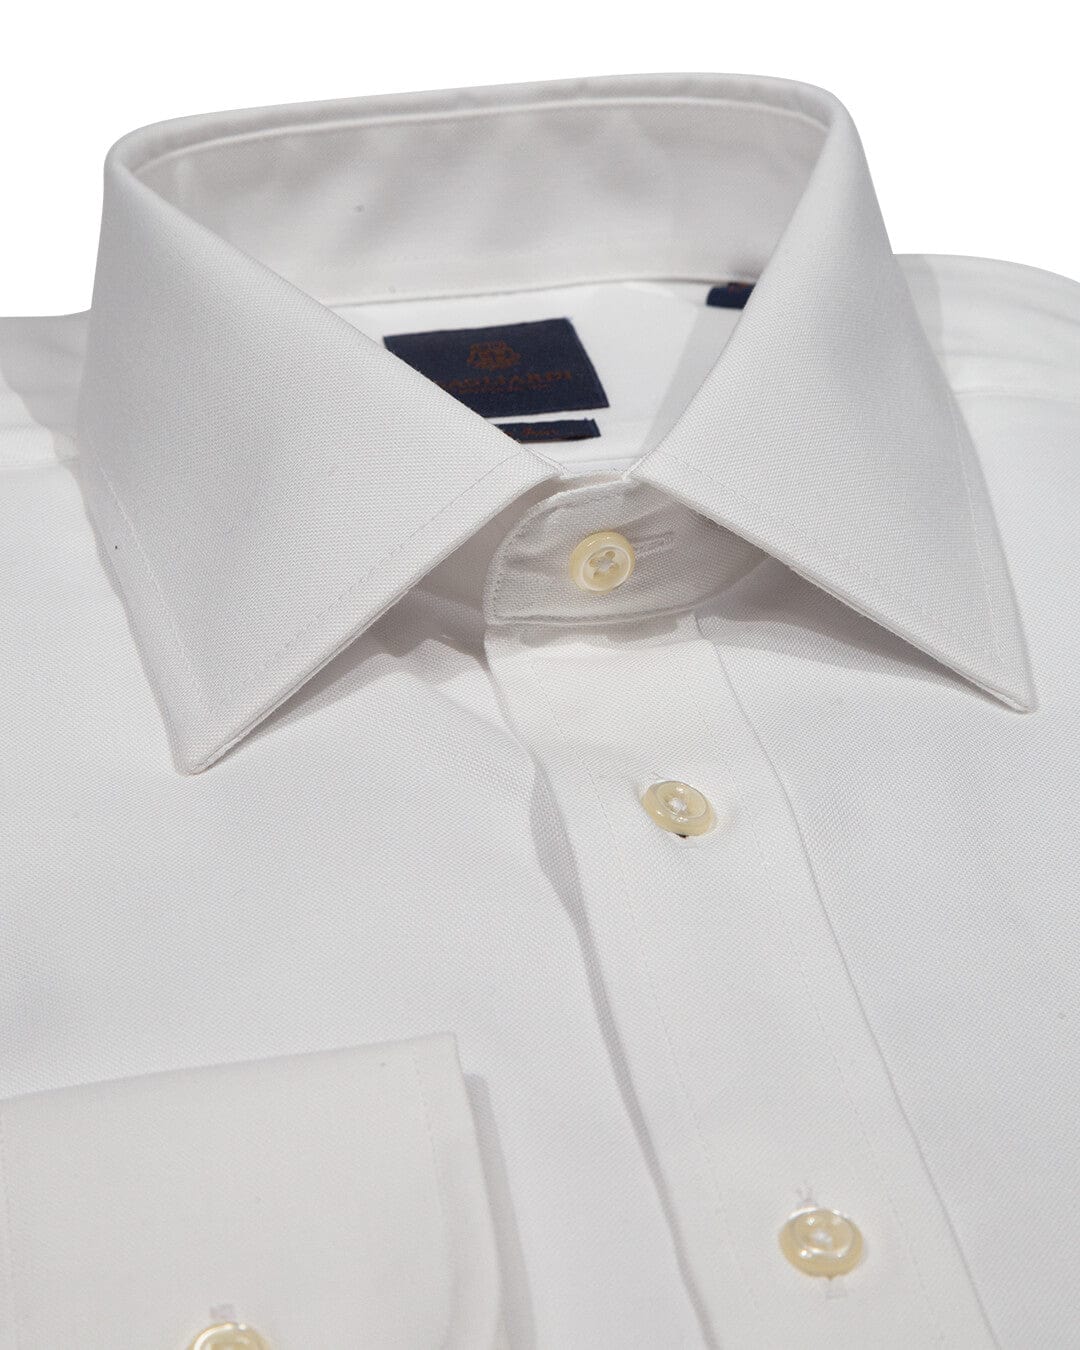 Gagliardi Shirts Gagliardi Tailored Fit White Oxford Non Iron Shirt No Pocket